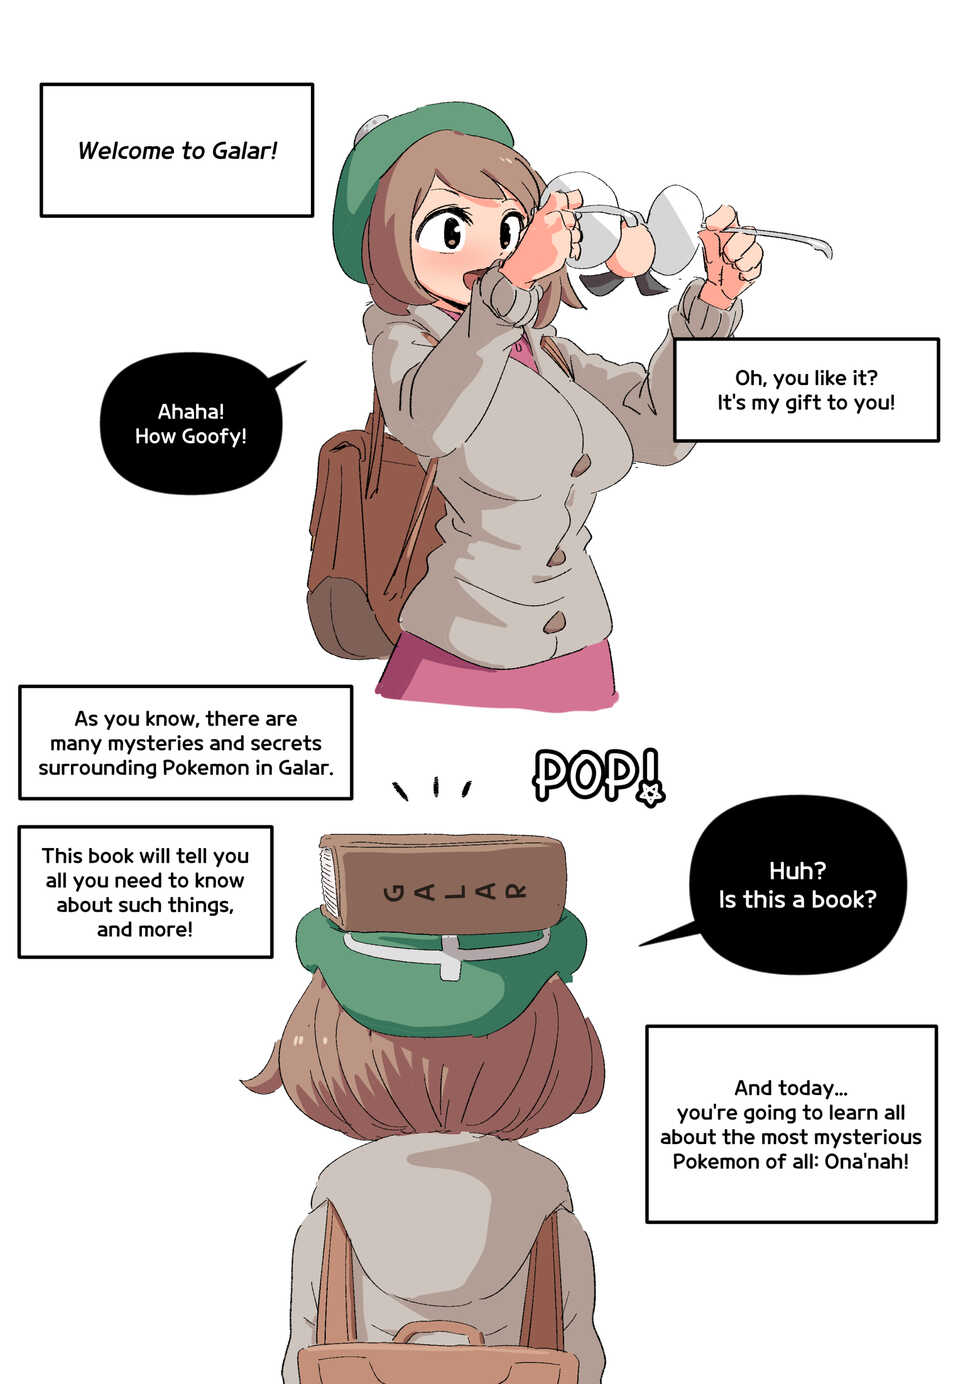 [Woomochichi] Introducing! Gallar's new Pokemon, Ona'nah! - Page 2